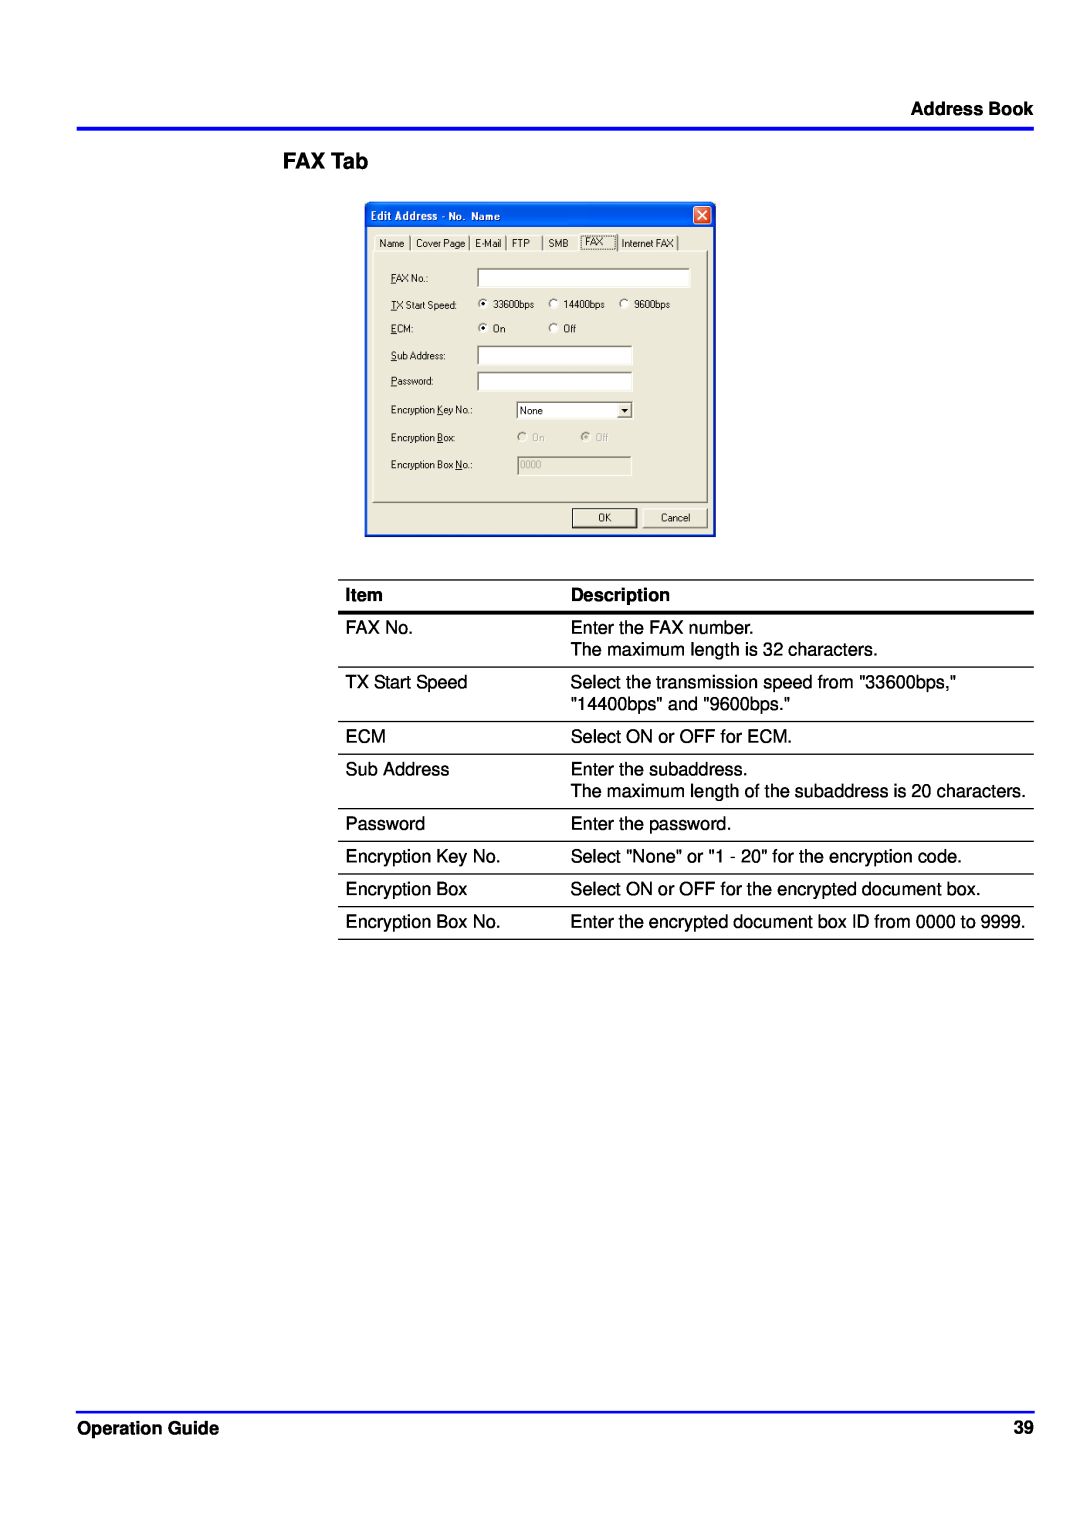 Kyocera KM-NET manual FAX Tab, Address Book, Item, Description, Operation Guide 